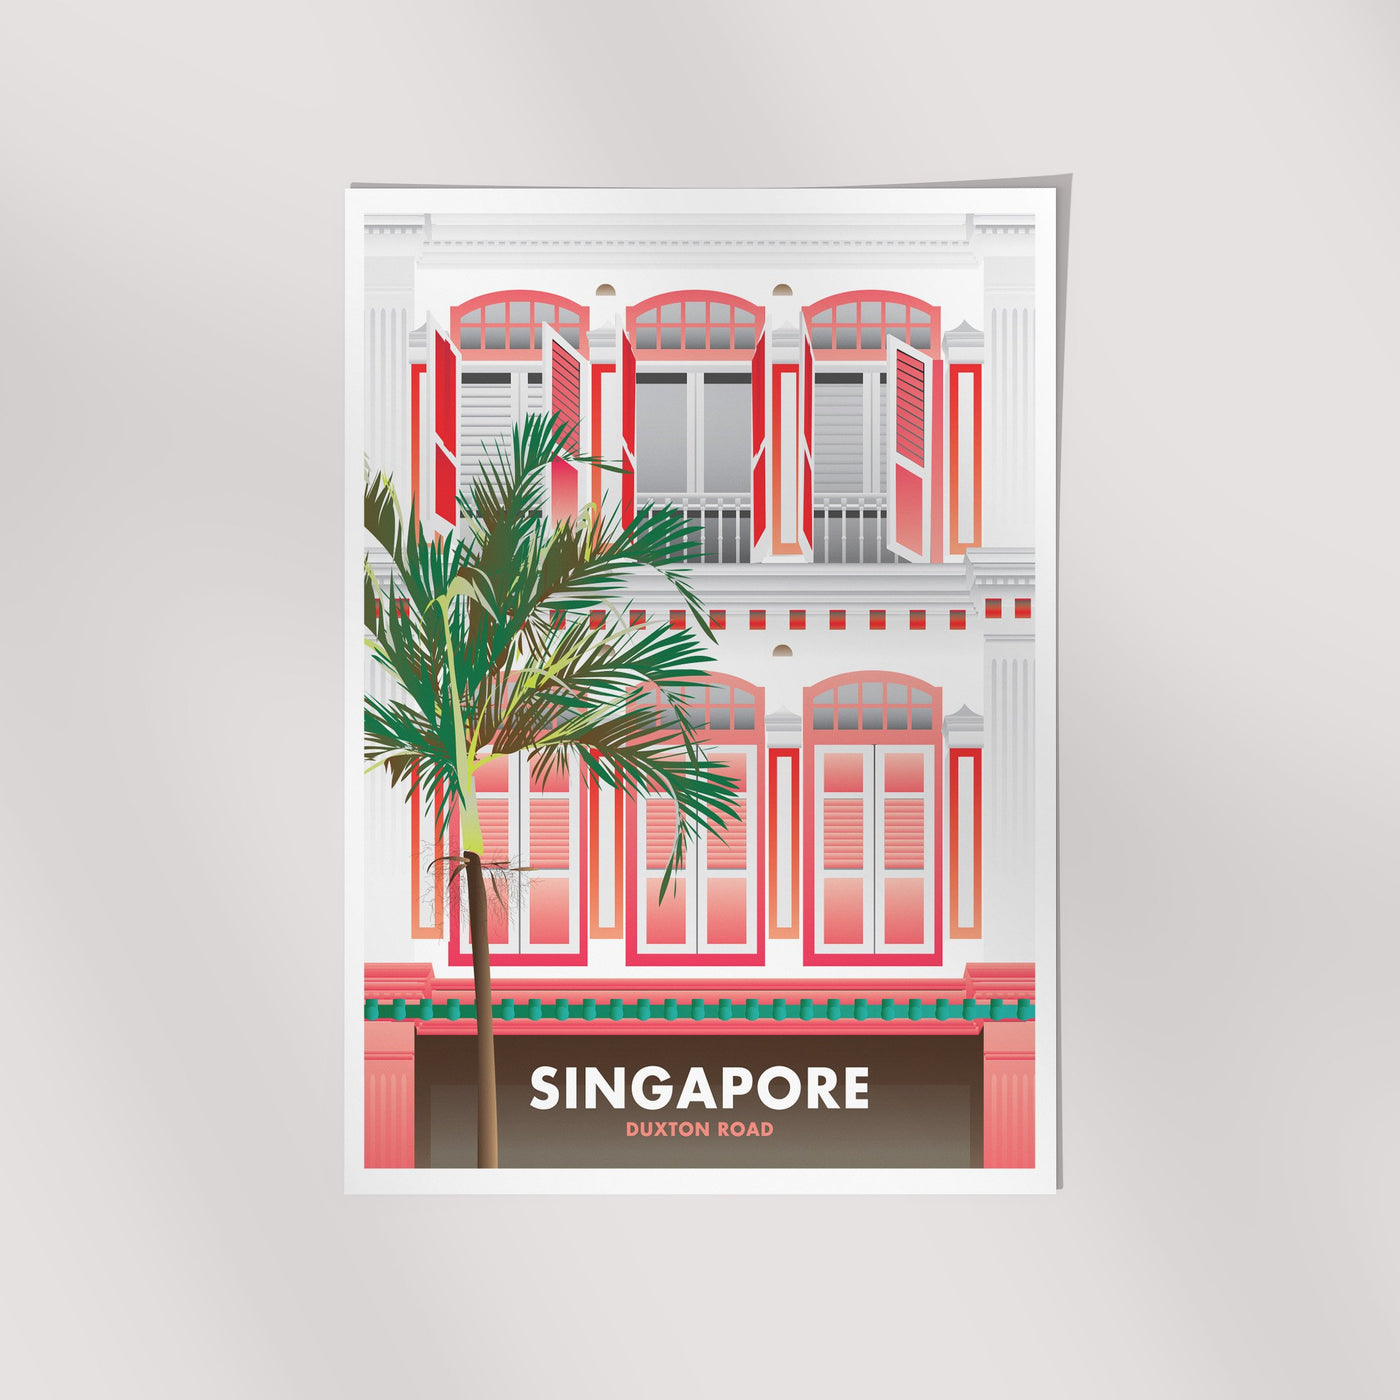 Singapore - Duxton Road Shophouse Illustrated Print